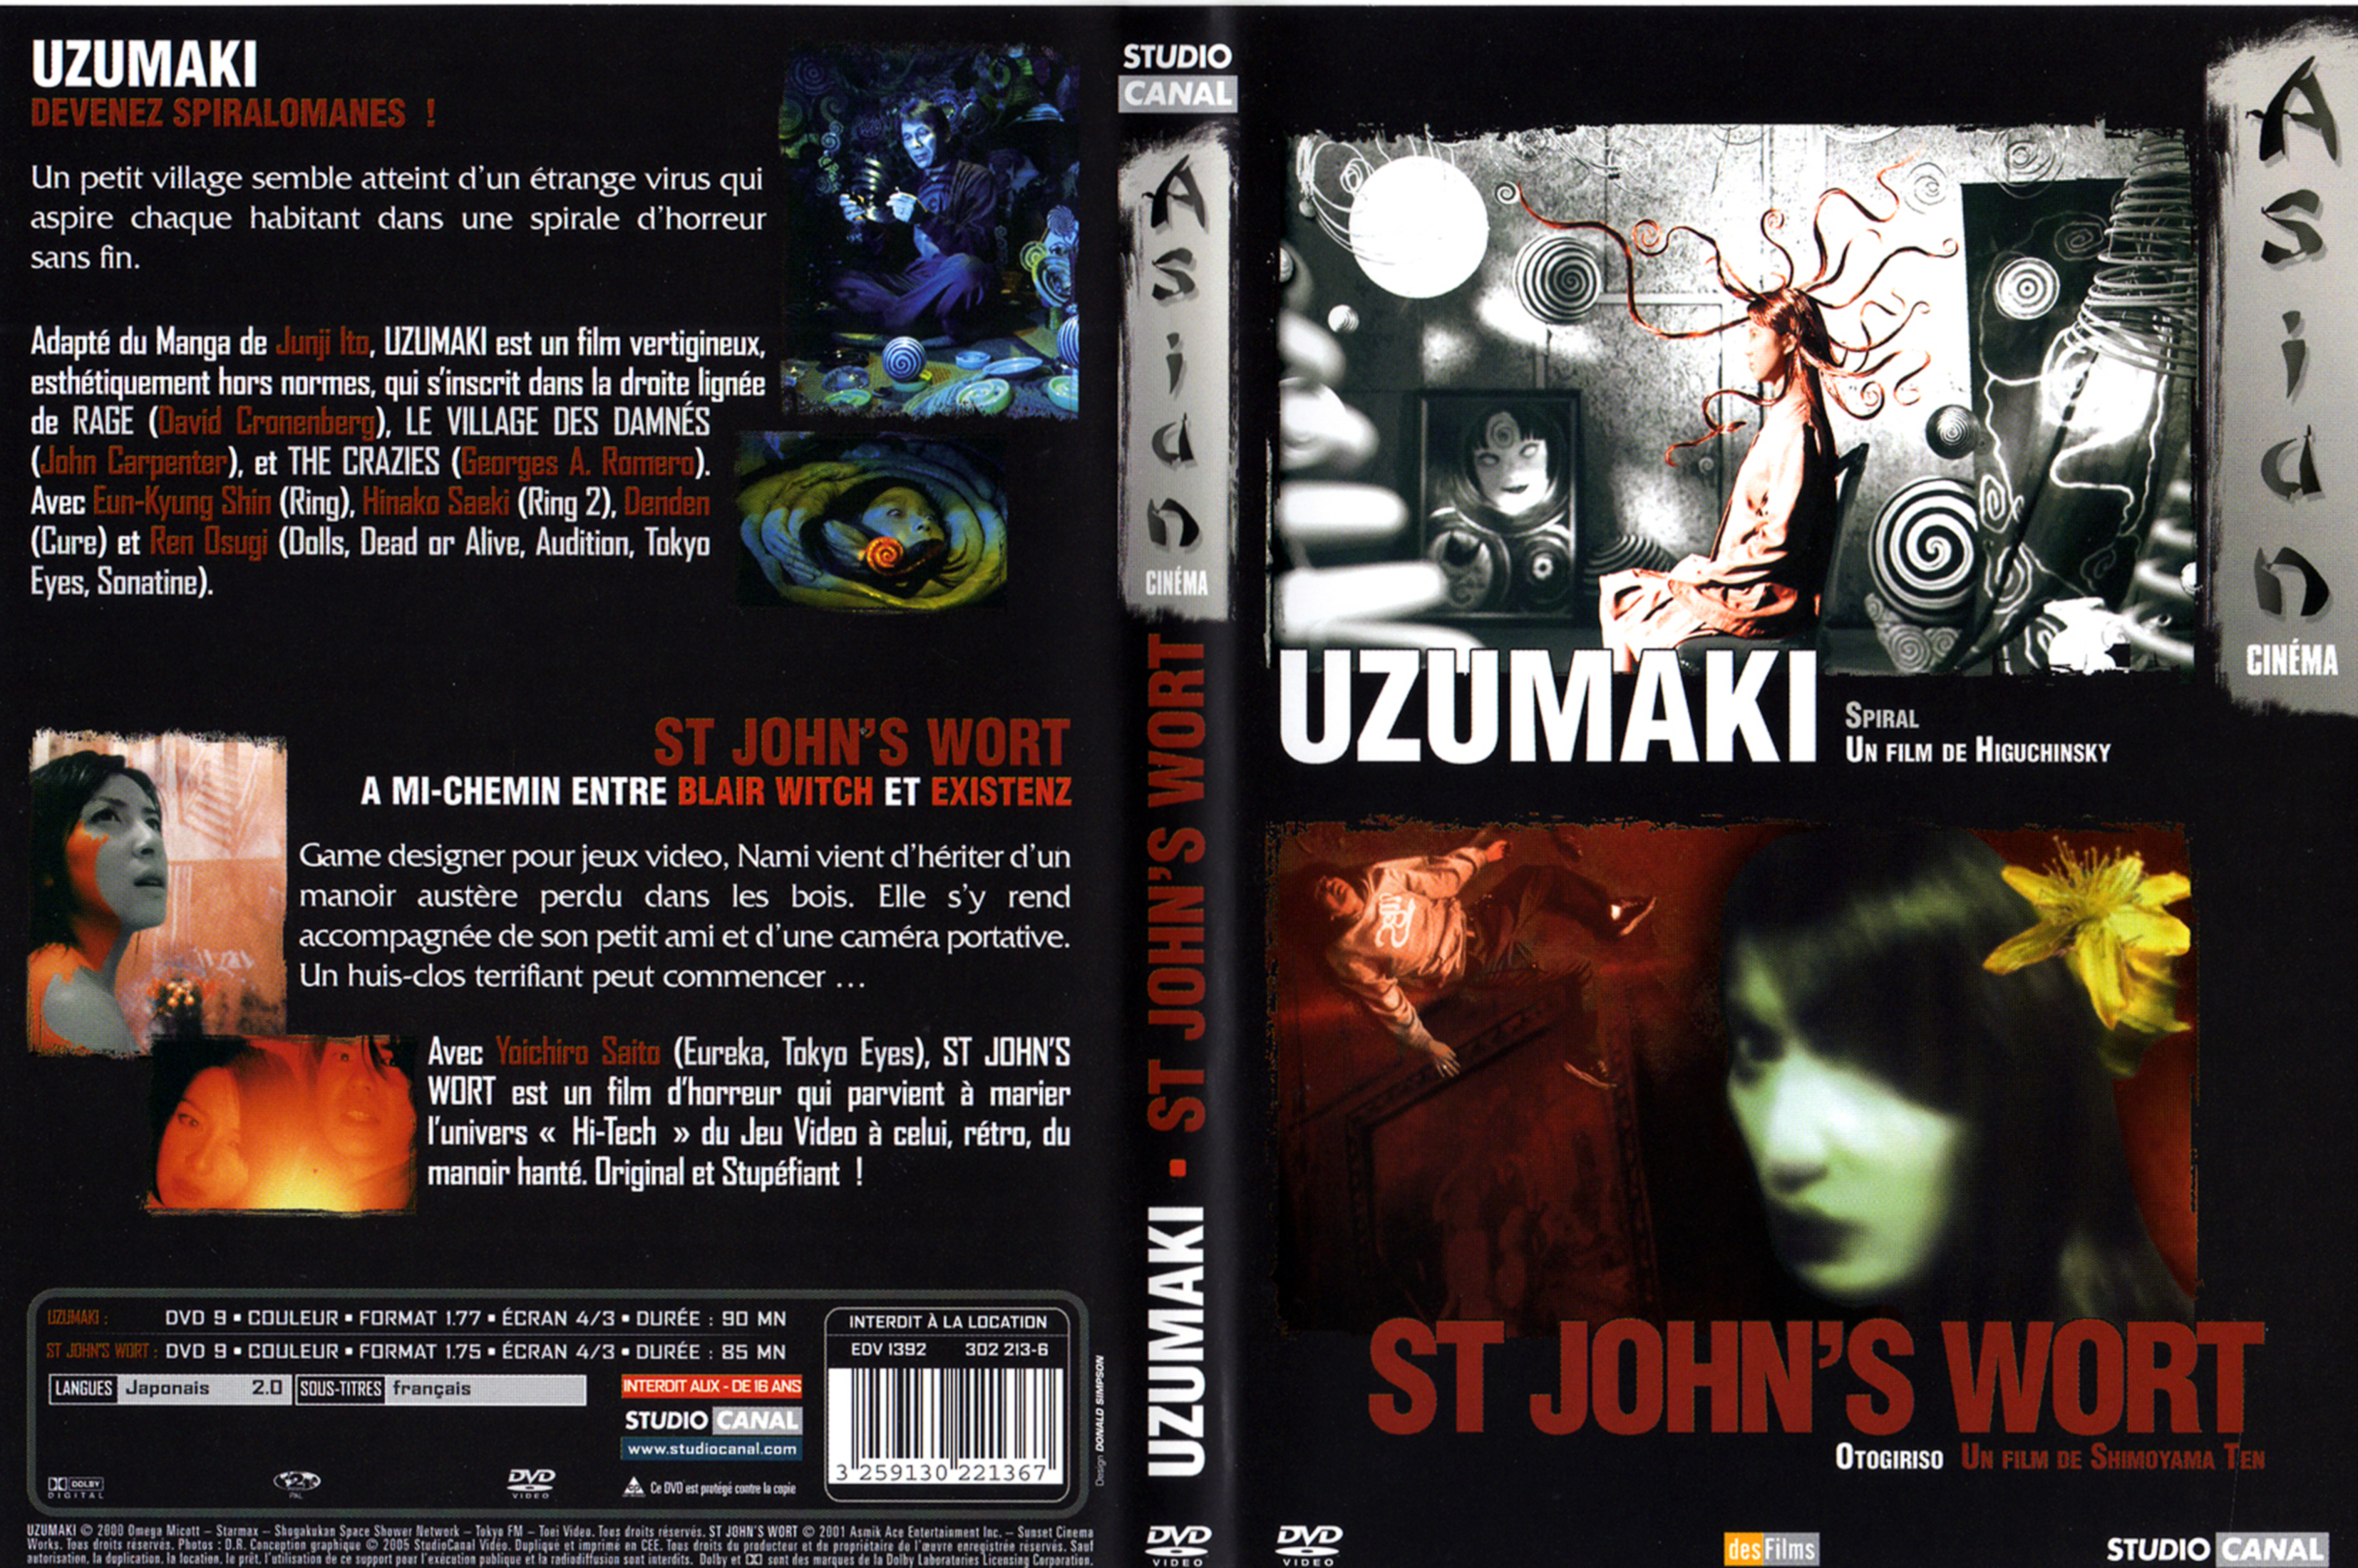 Jaquette DVD Uzomaki + St John